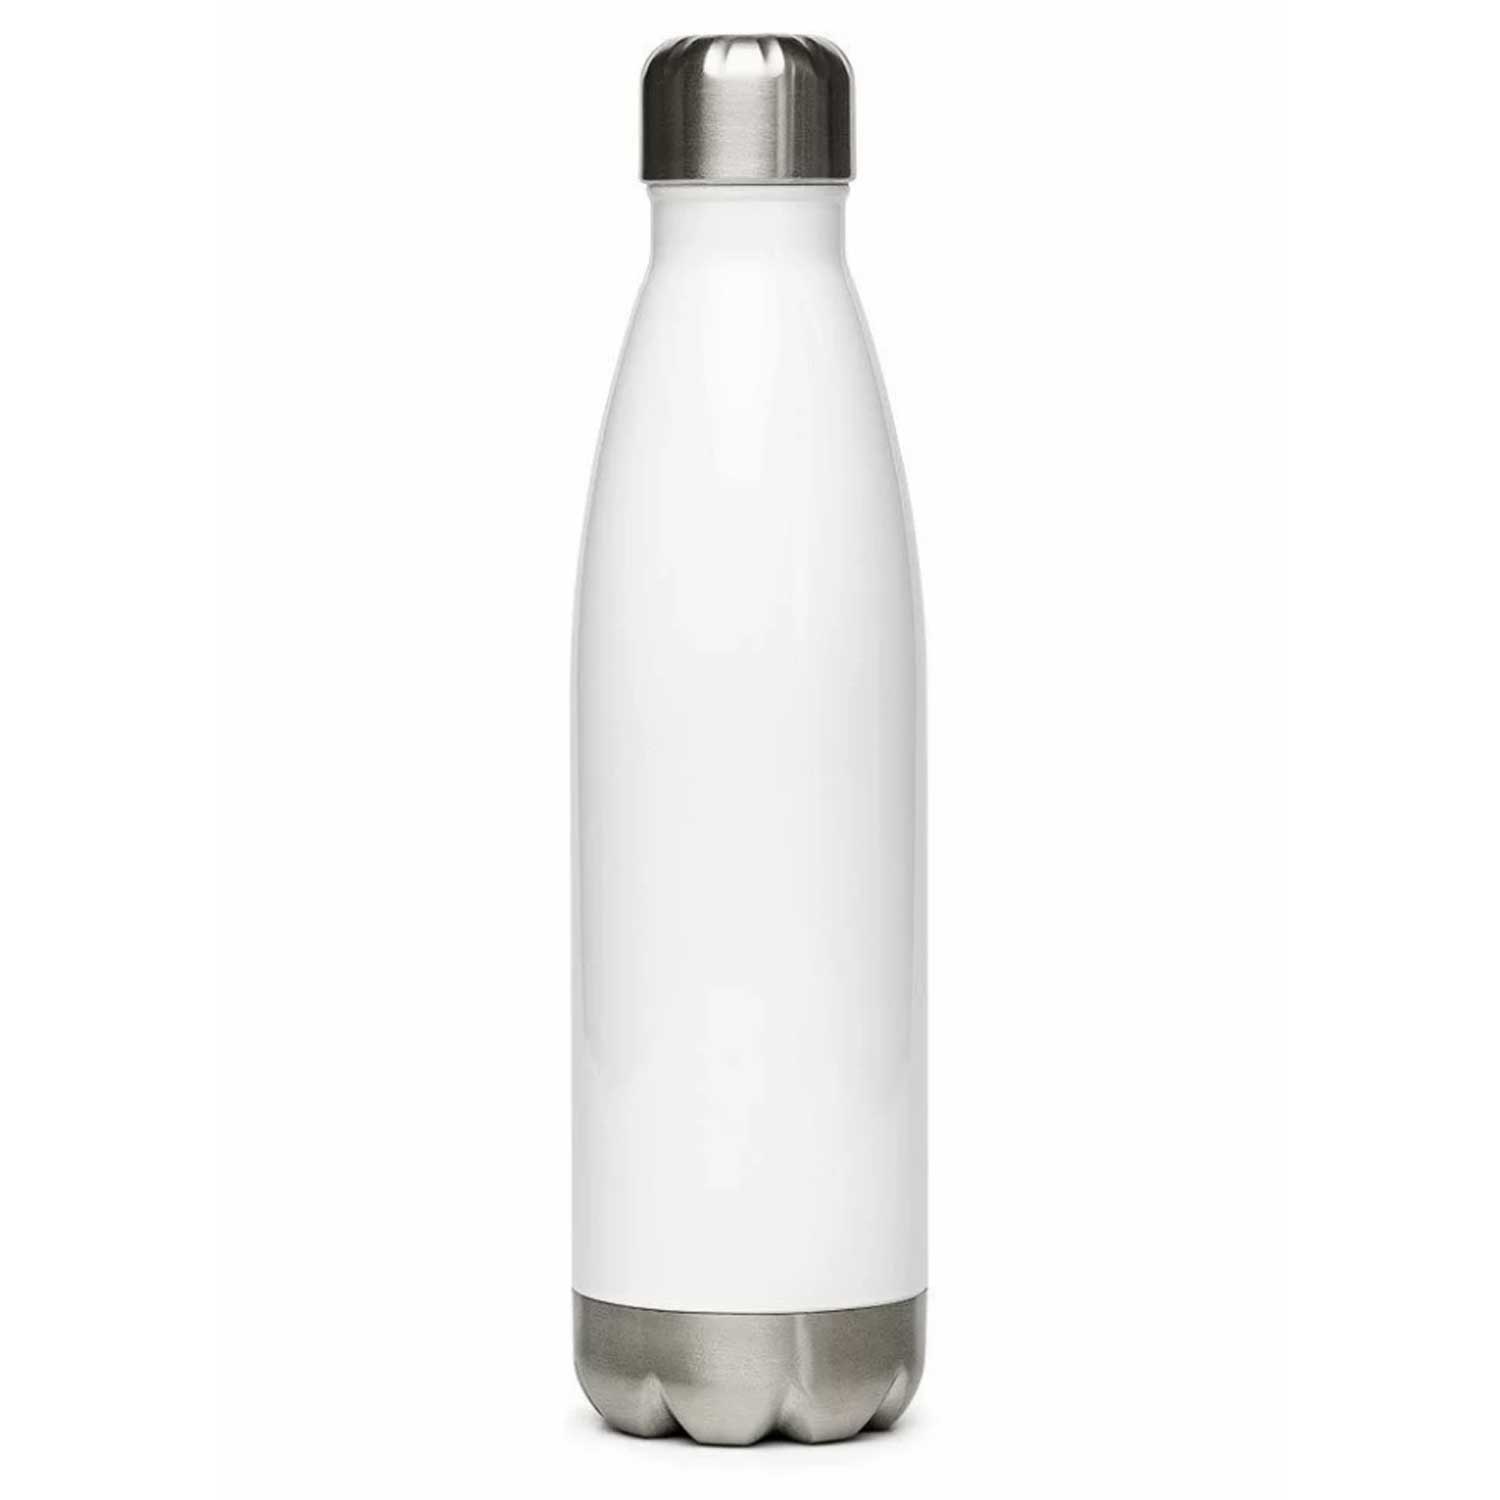 Stainless-Steel-Water-Bottle